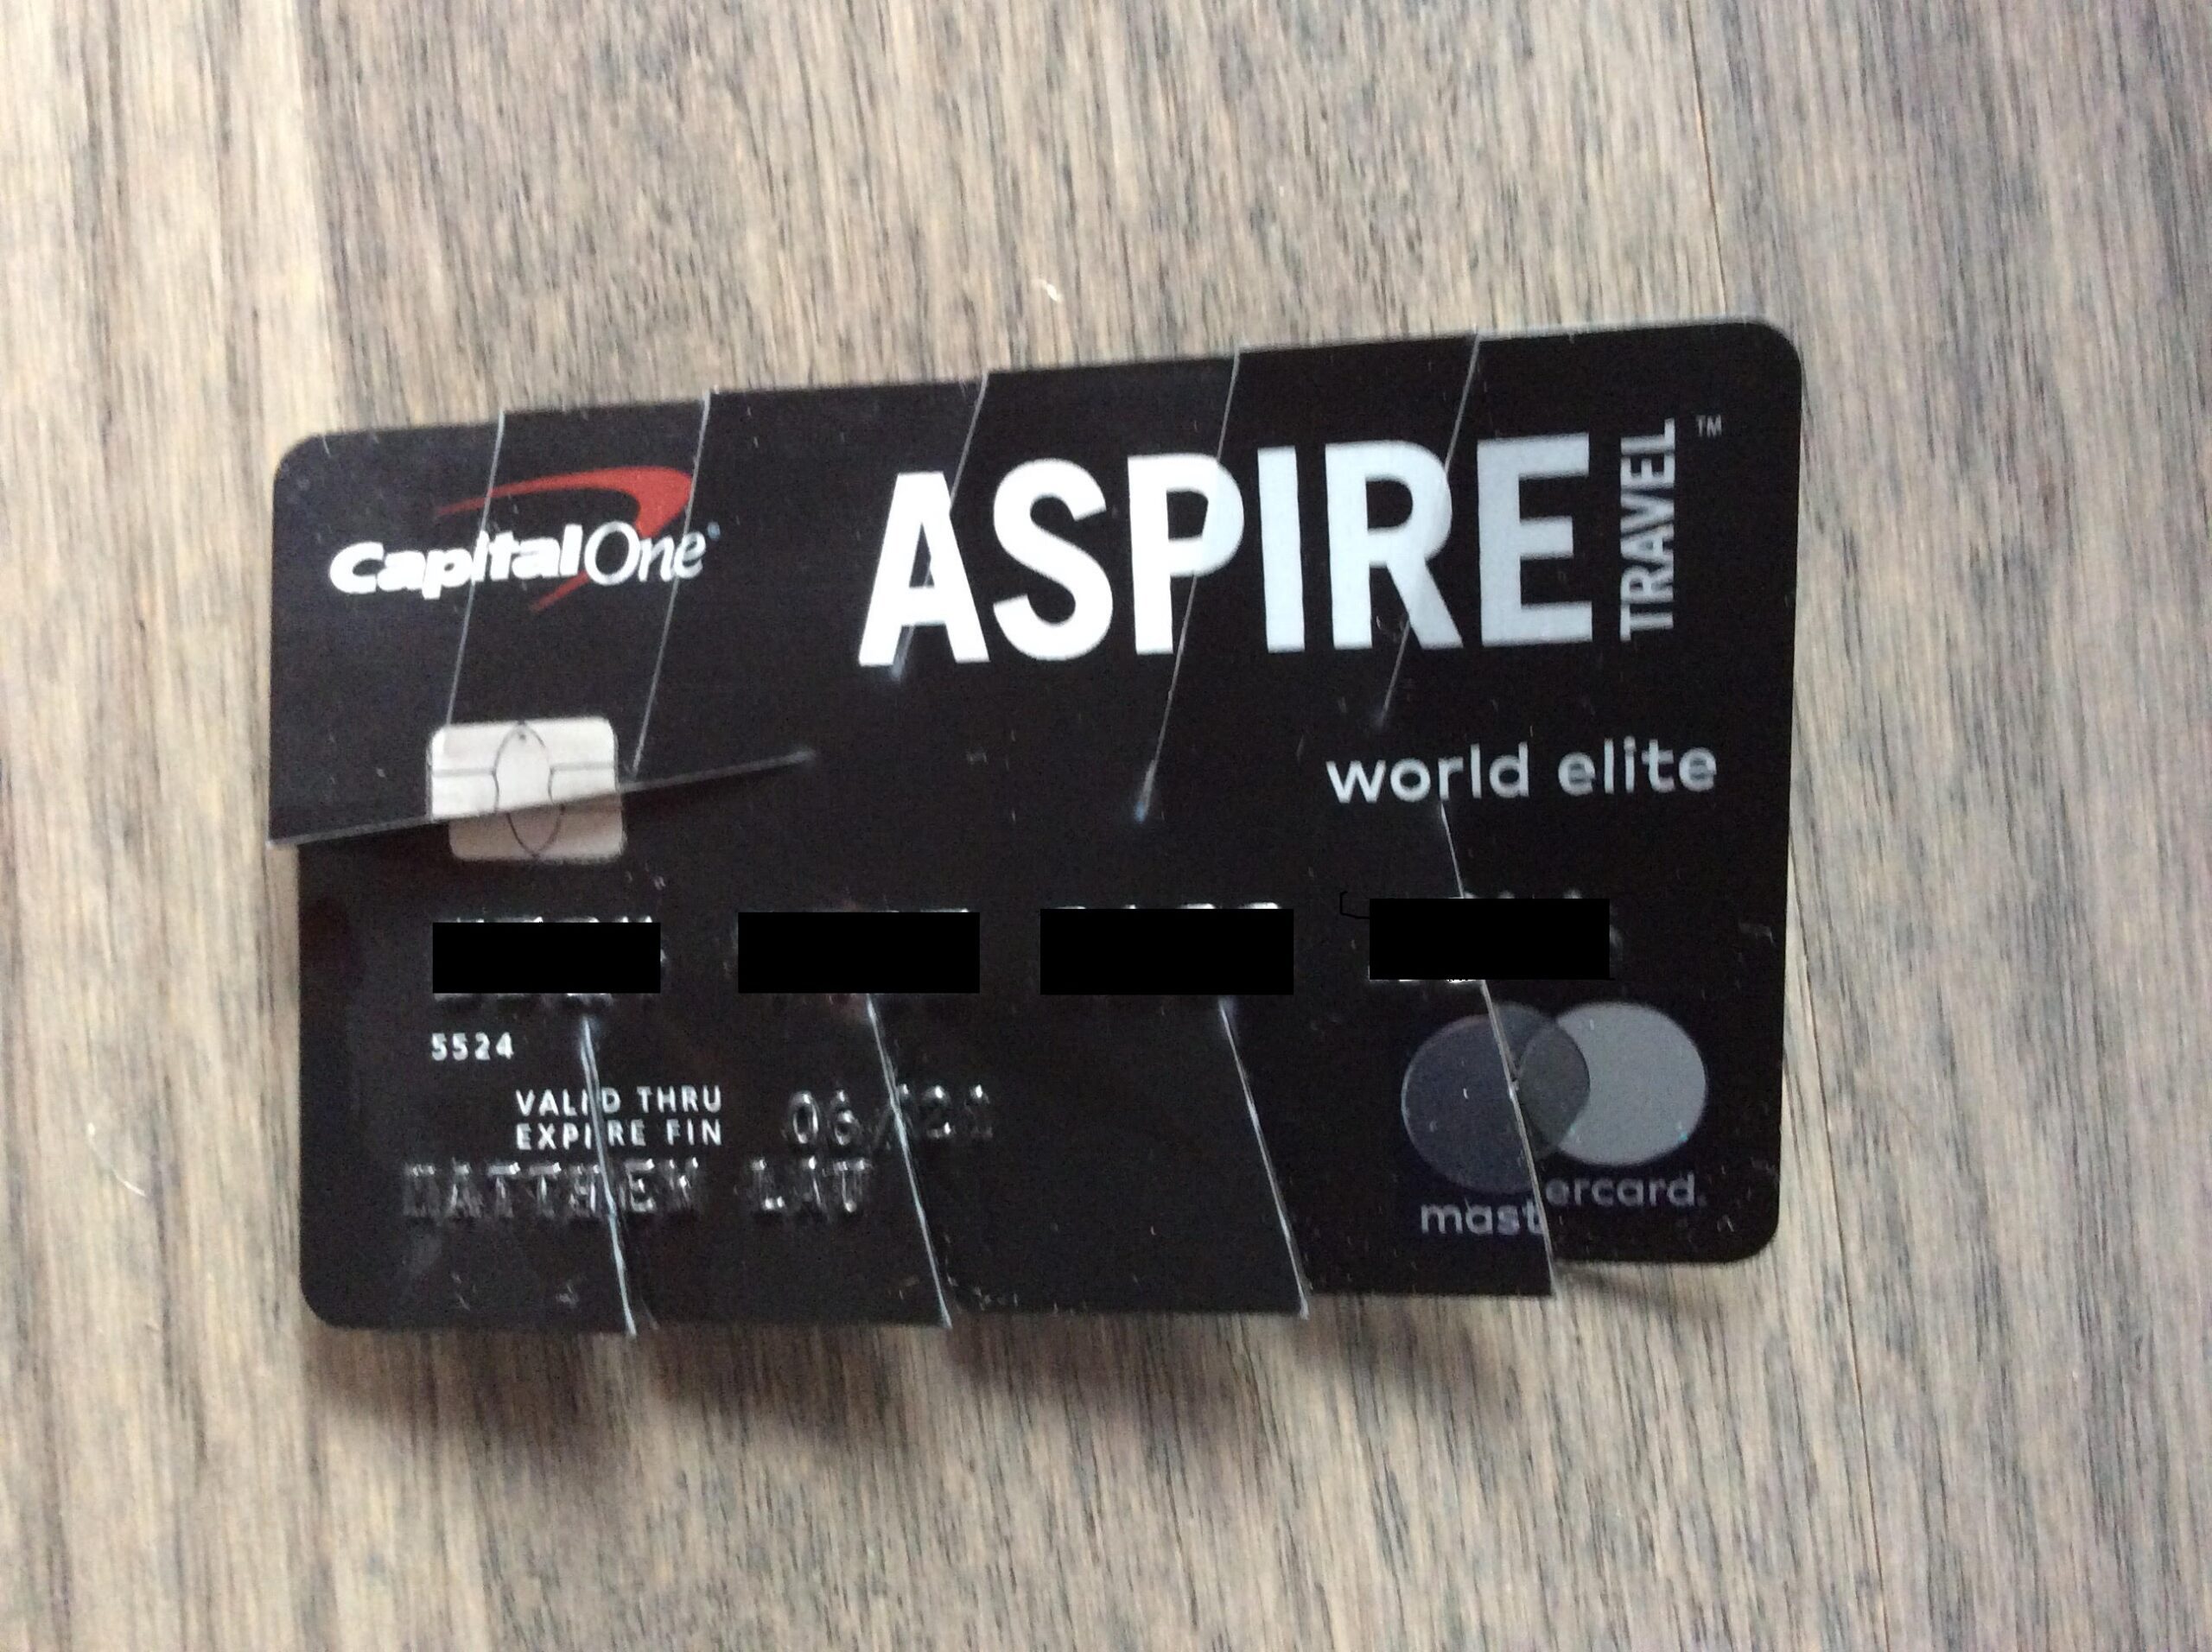 capital one aspire travel world elite mastercard